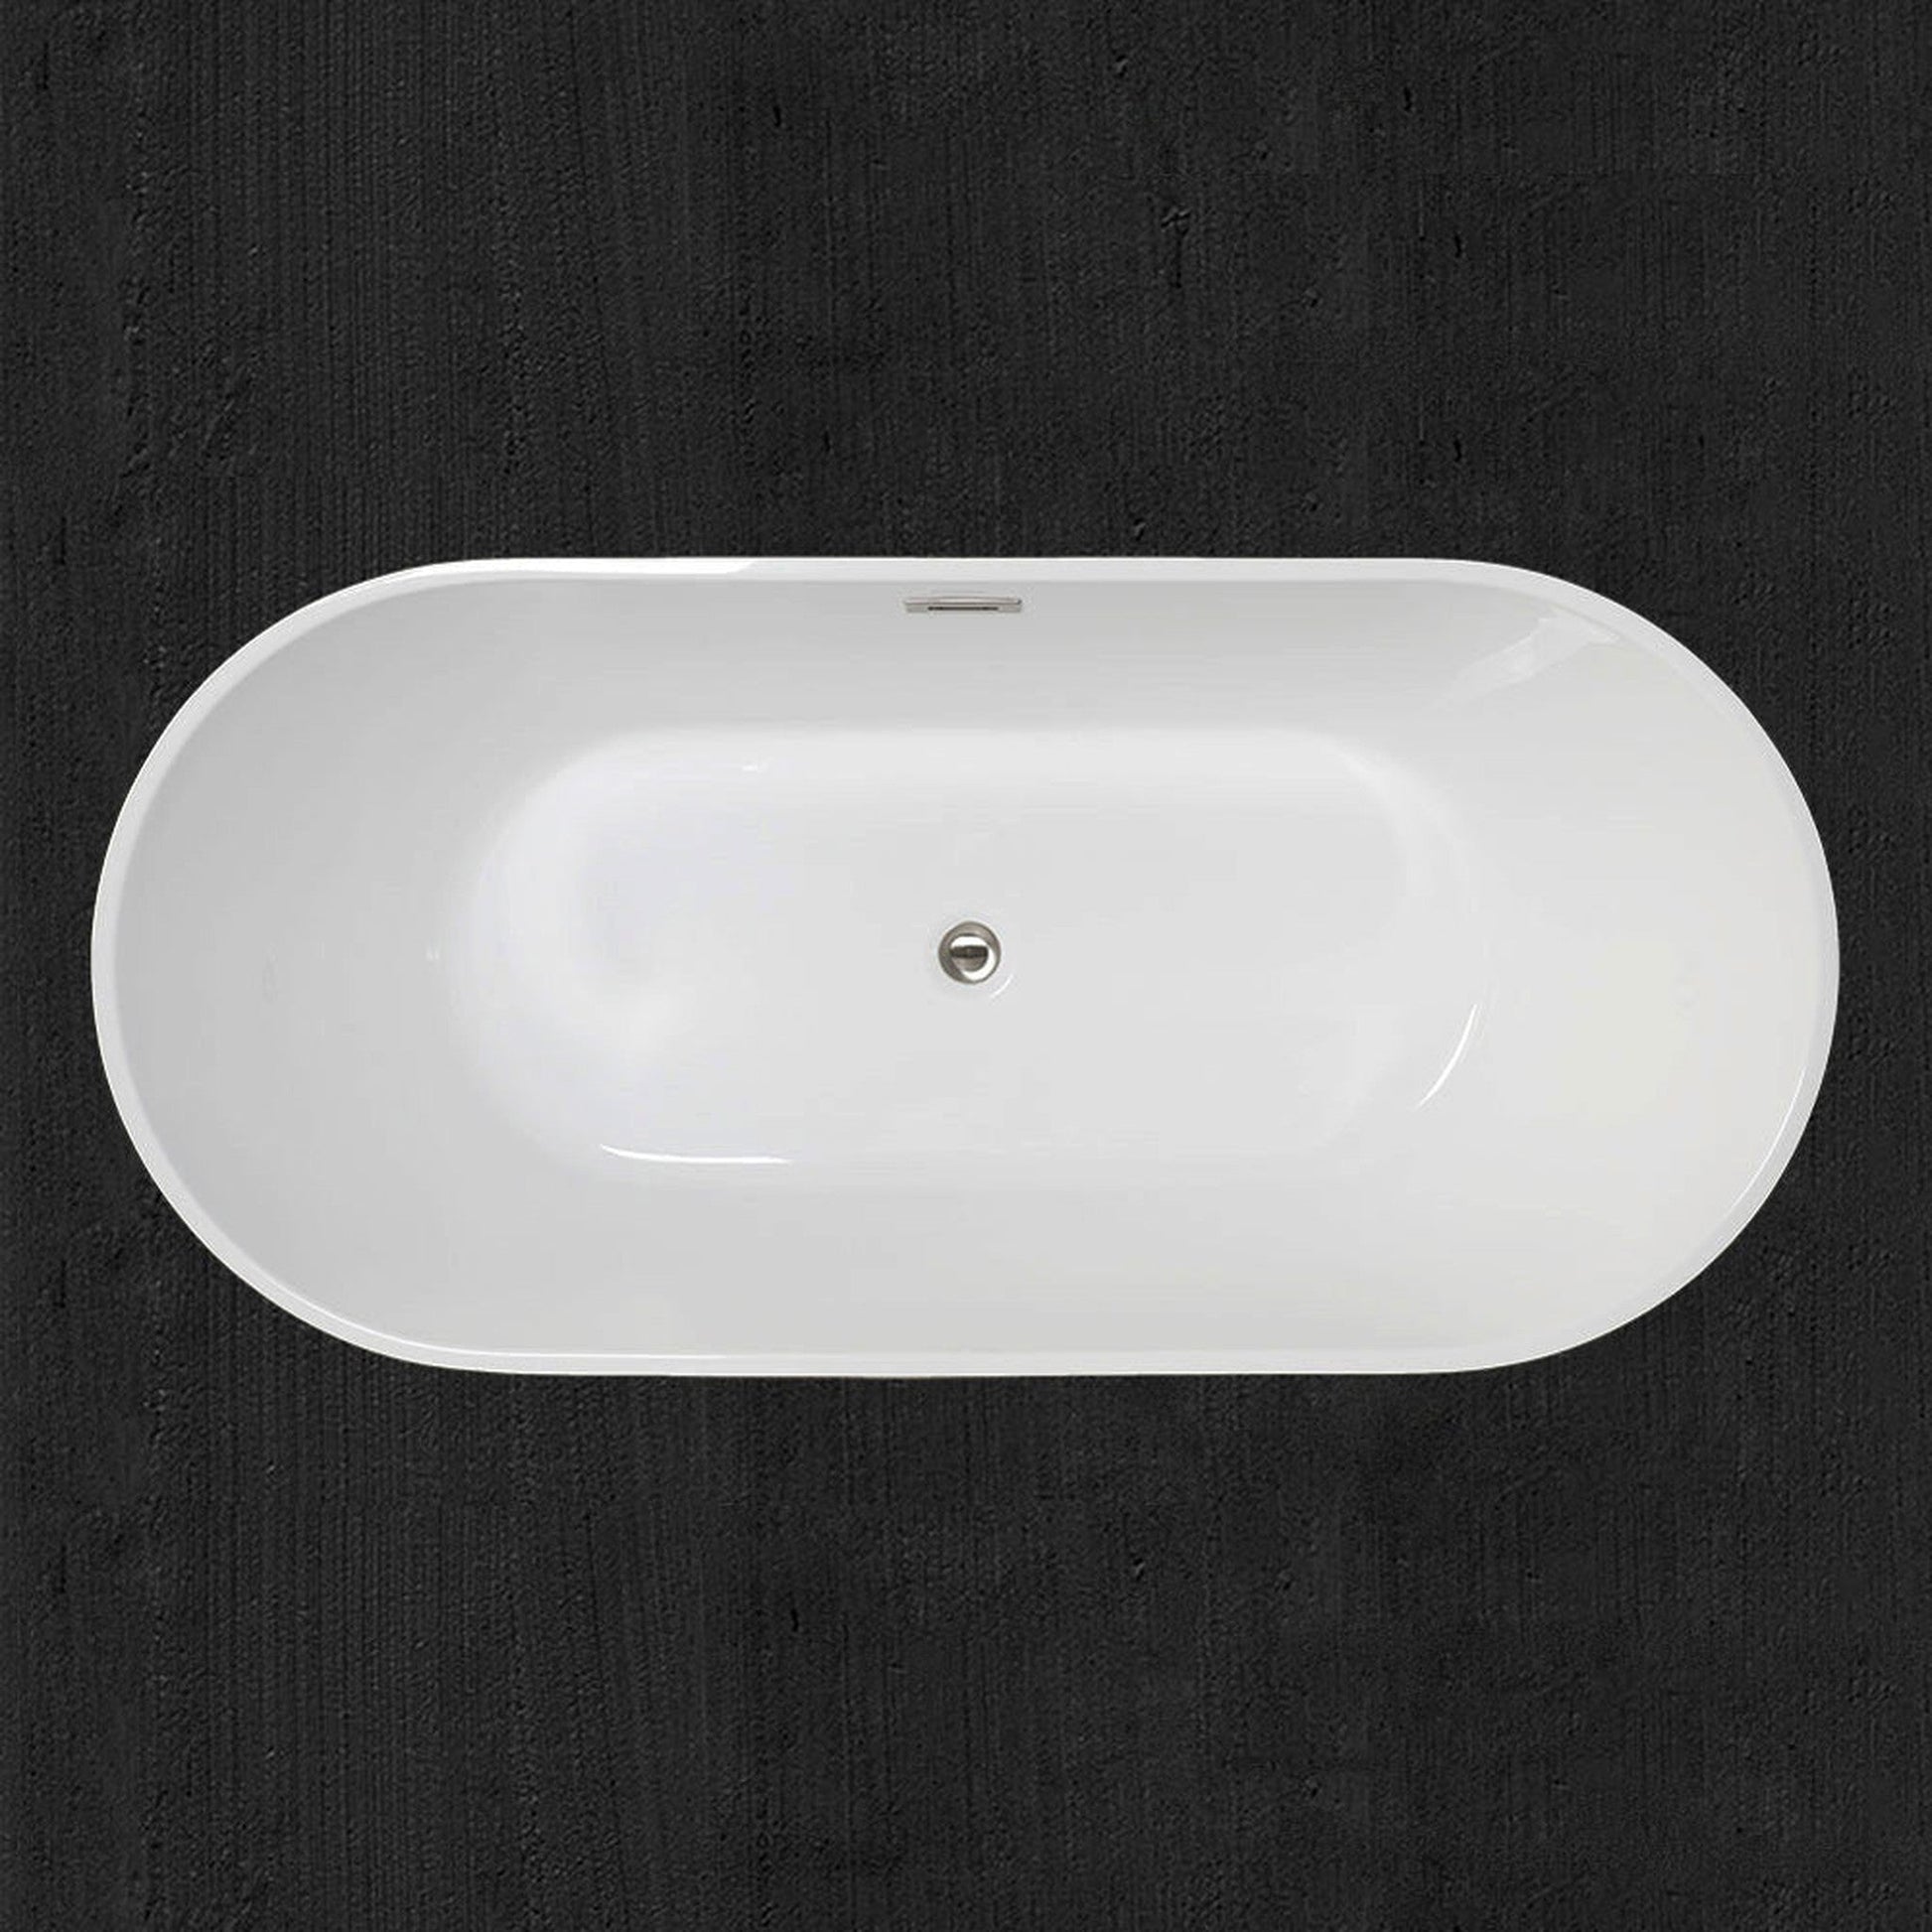 WoodBridge B0014 59" White Acrylic Freestanding Soaking Bathtub With Chrome Drain, Overflow, F0002CHRD Tub Filler and Caddy Tray